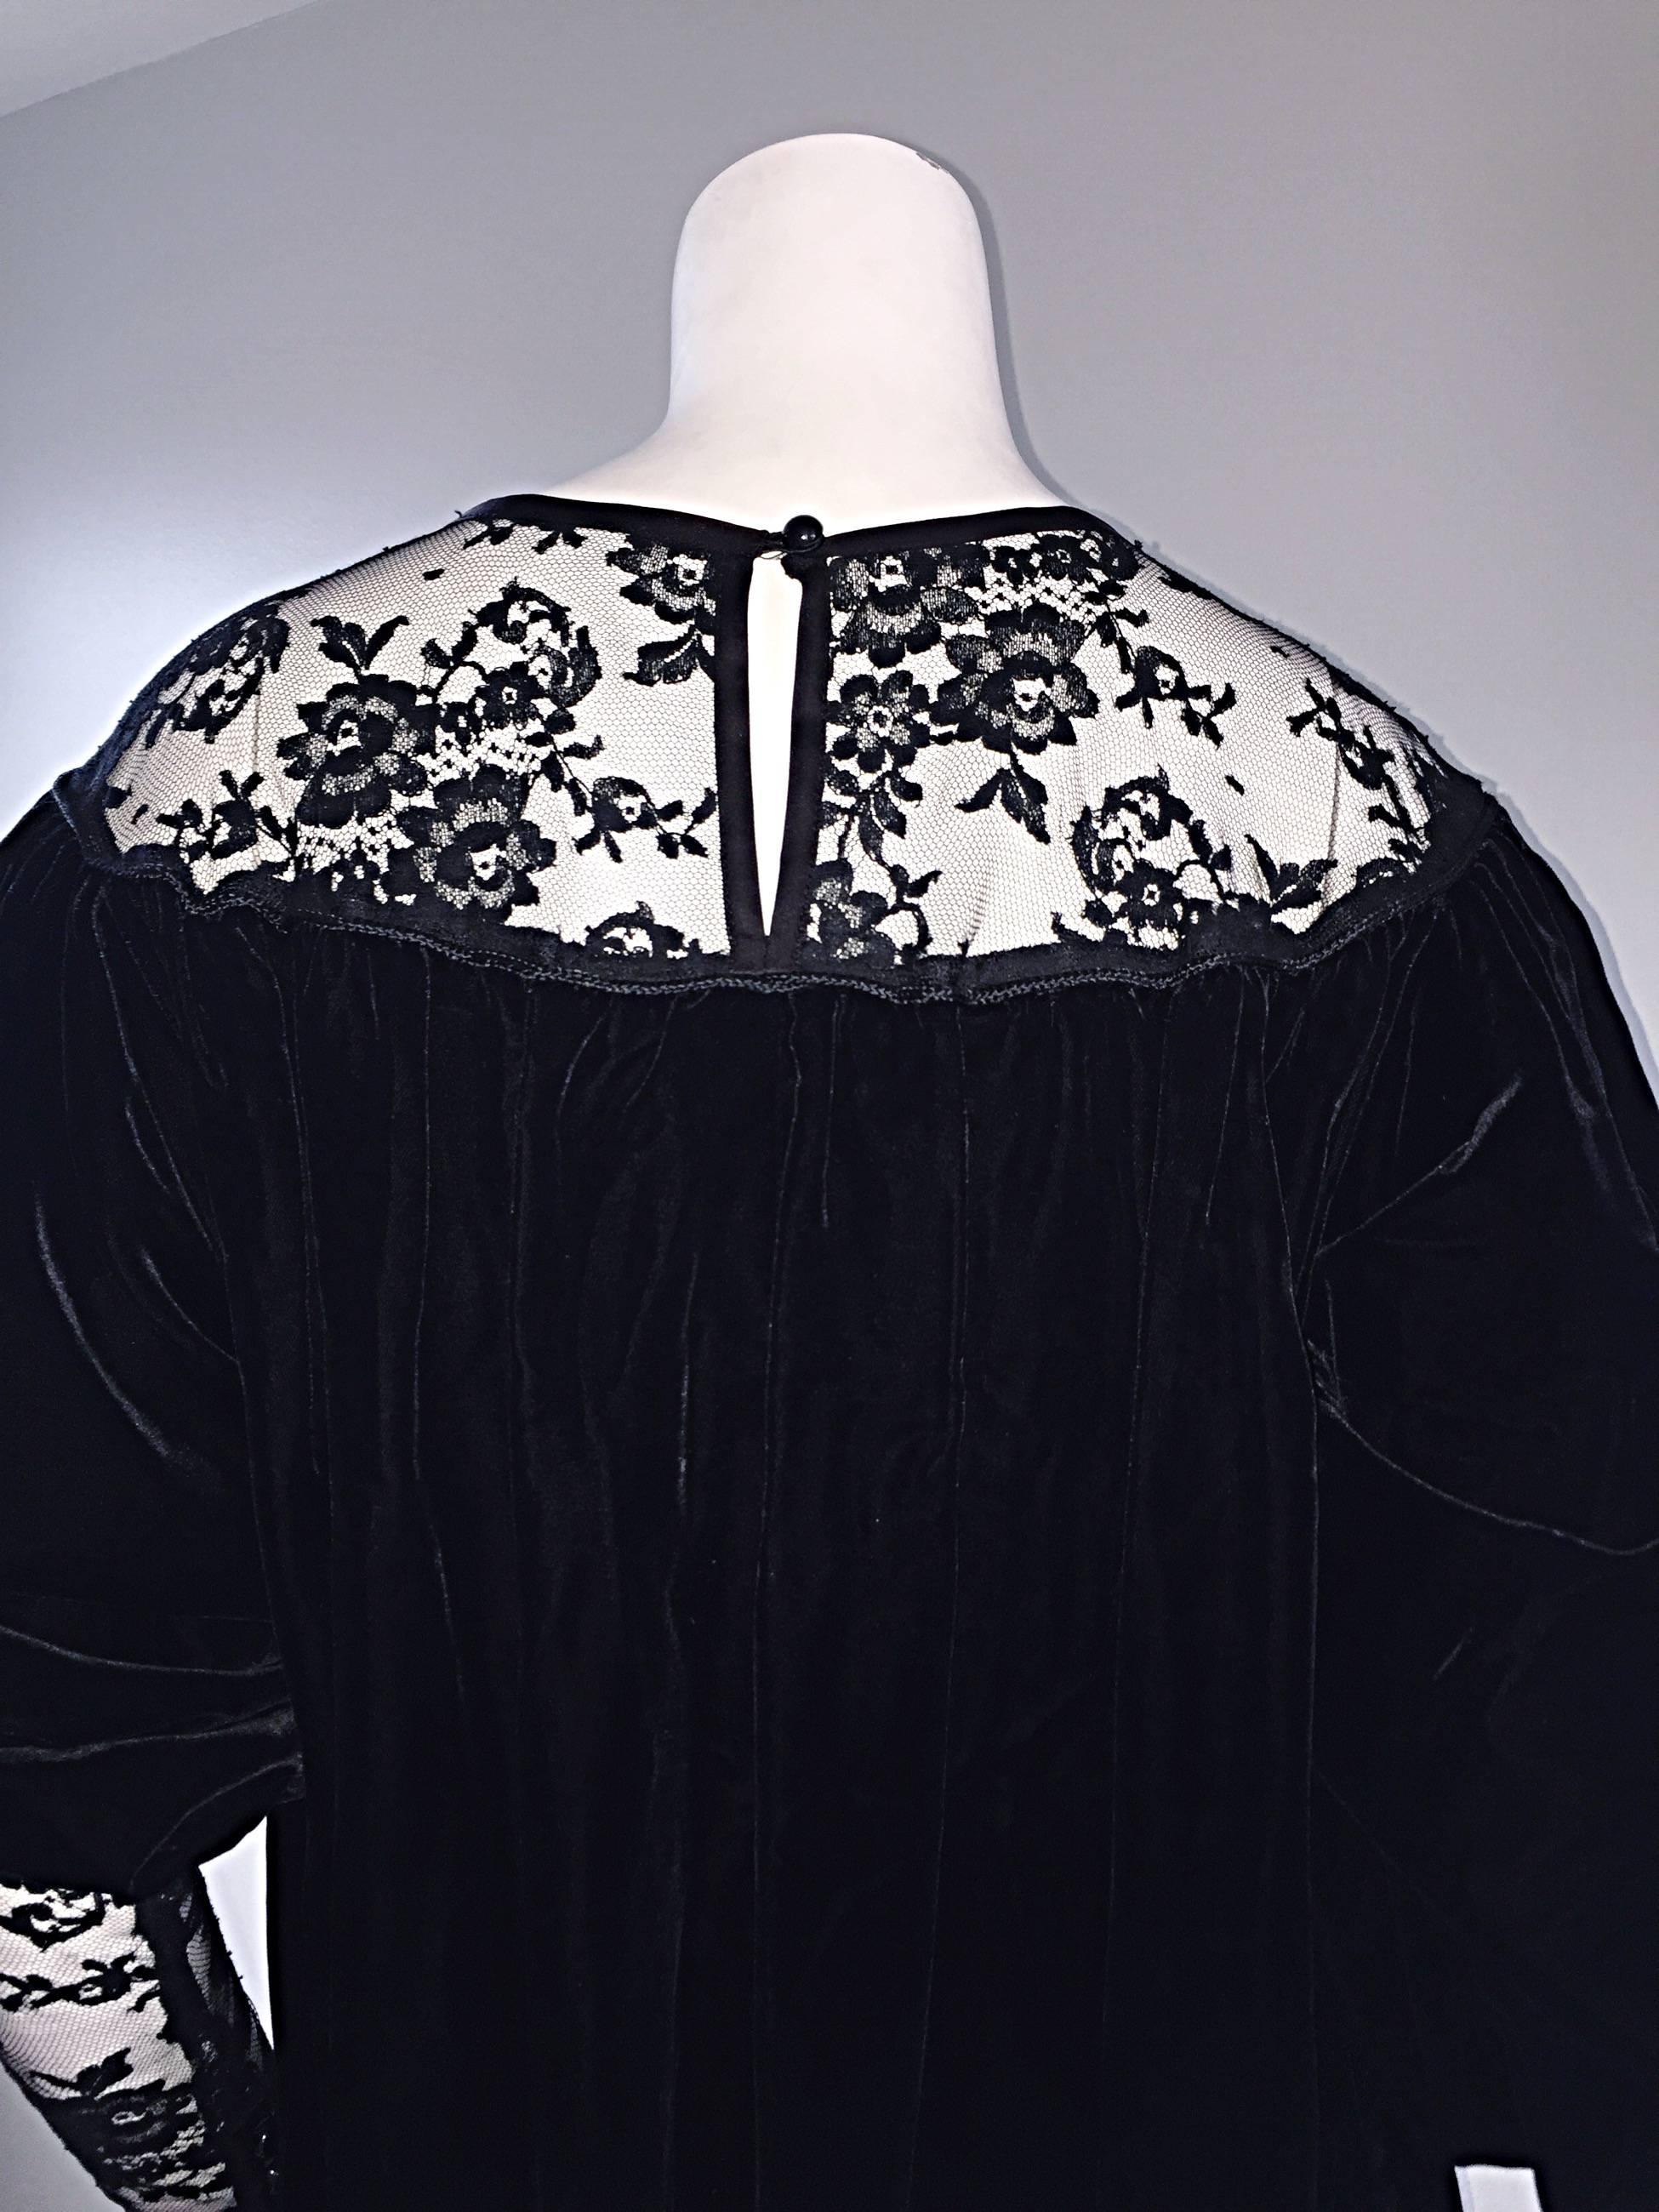 Women's Important Documented Vintage Yves Saint Laurent c 1981 Black Velvet + Lace Dress